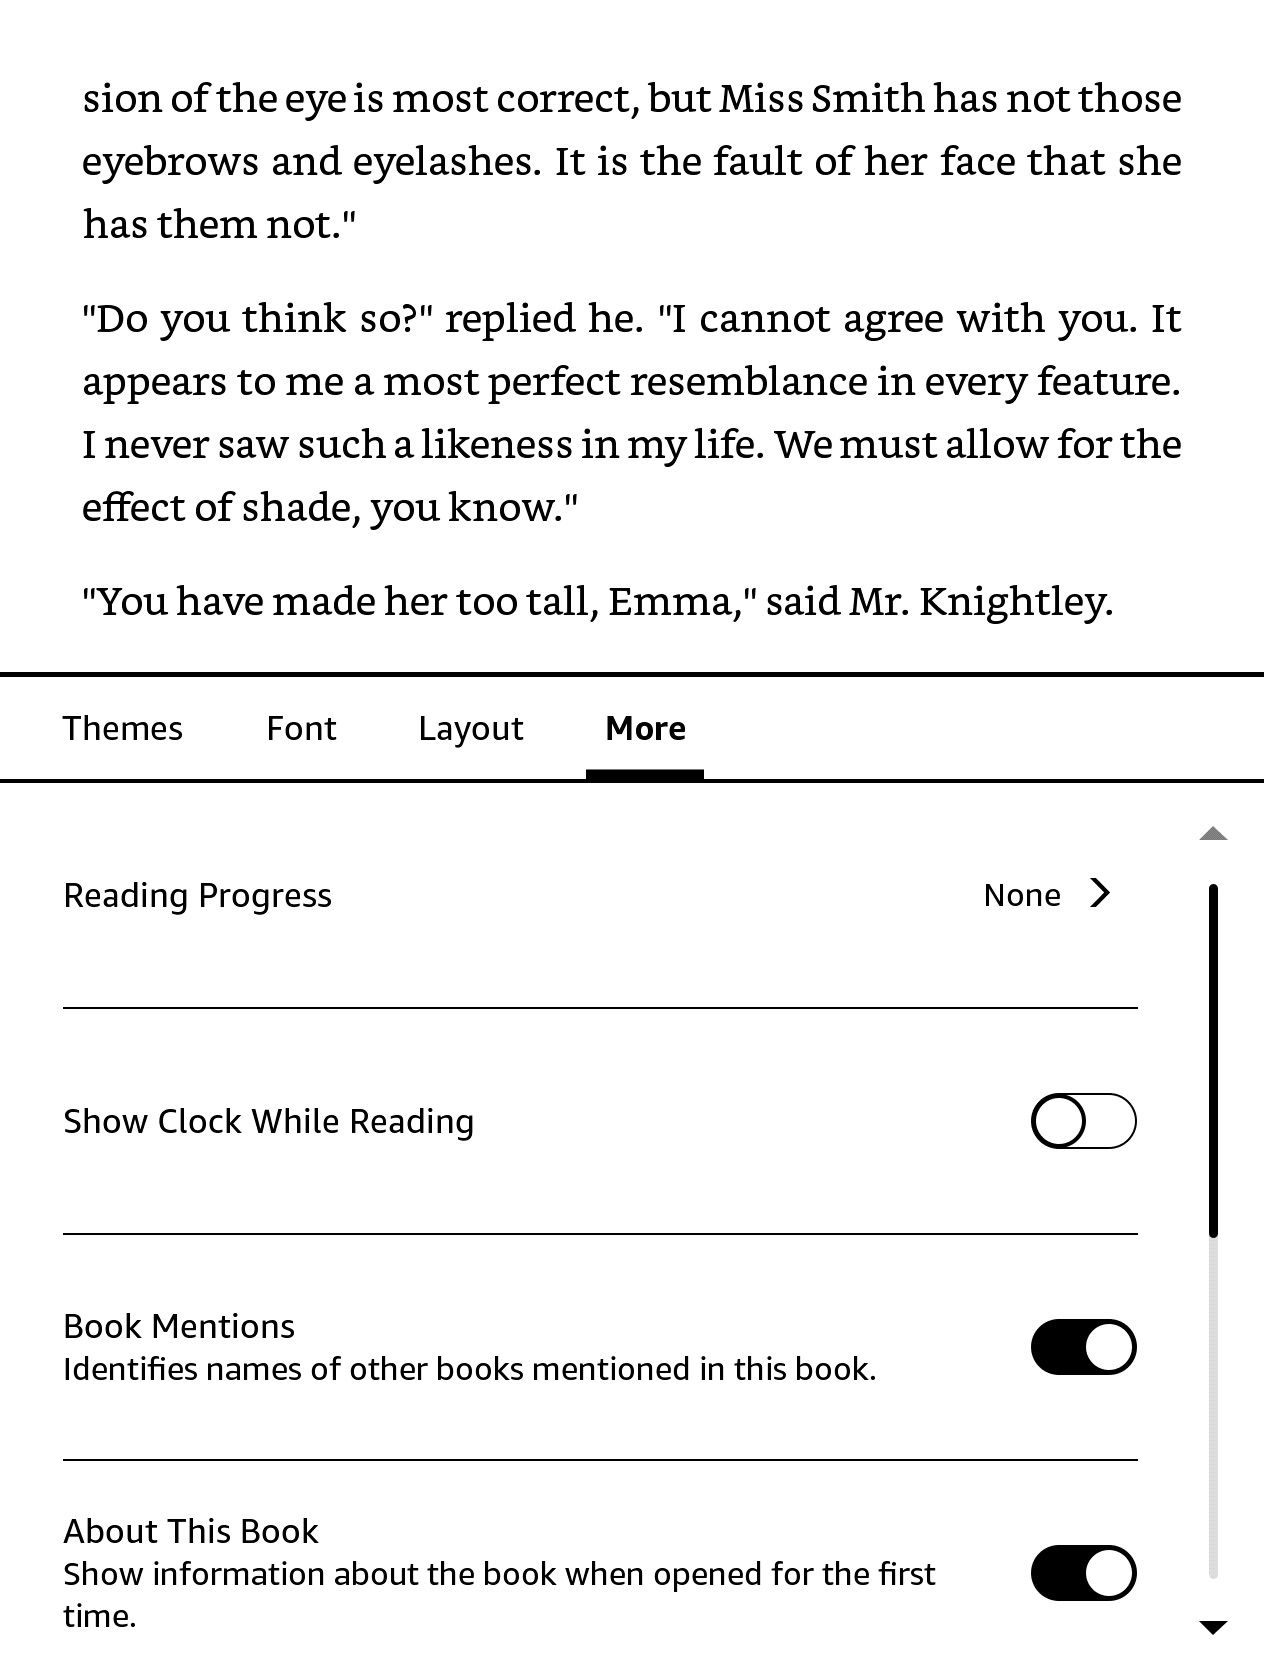 Screenshot of Kindle Reading Progress menu